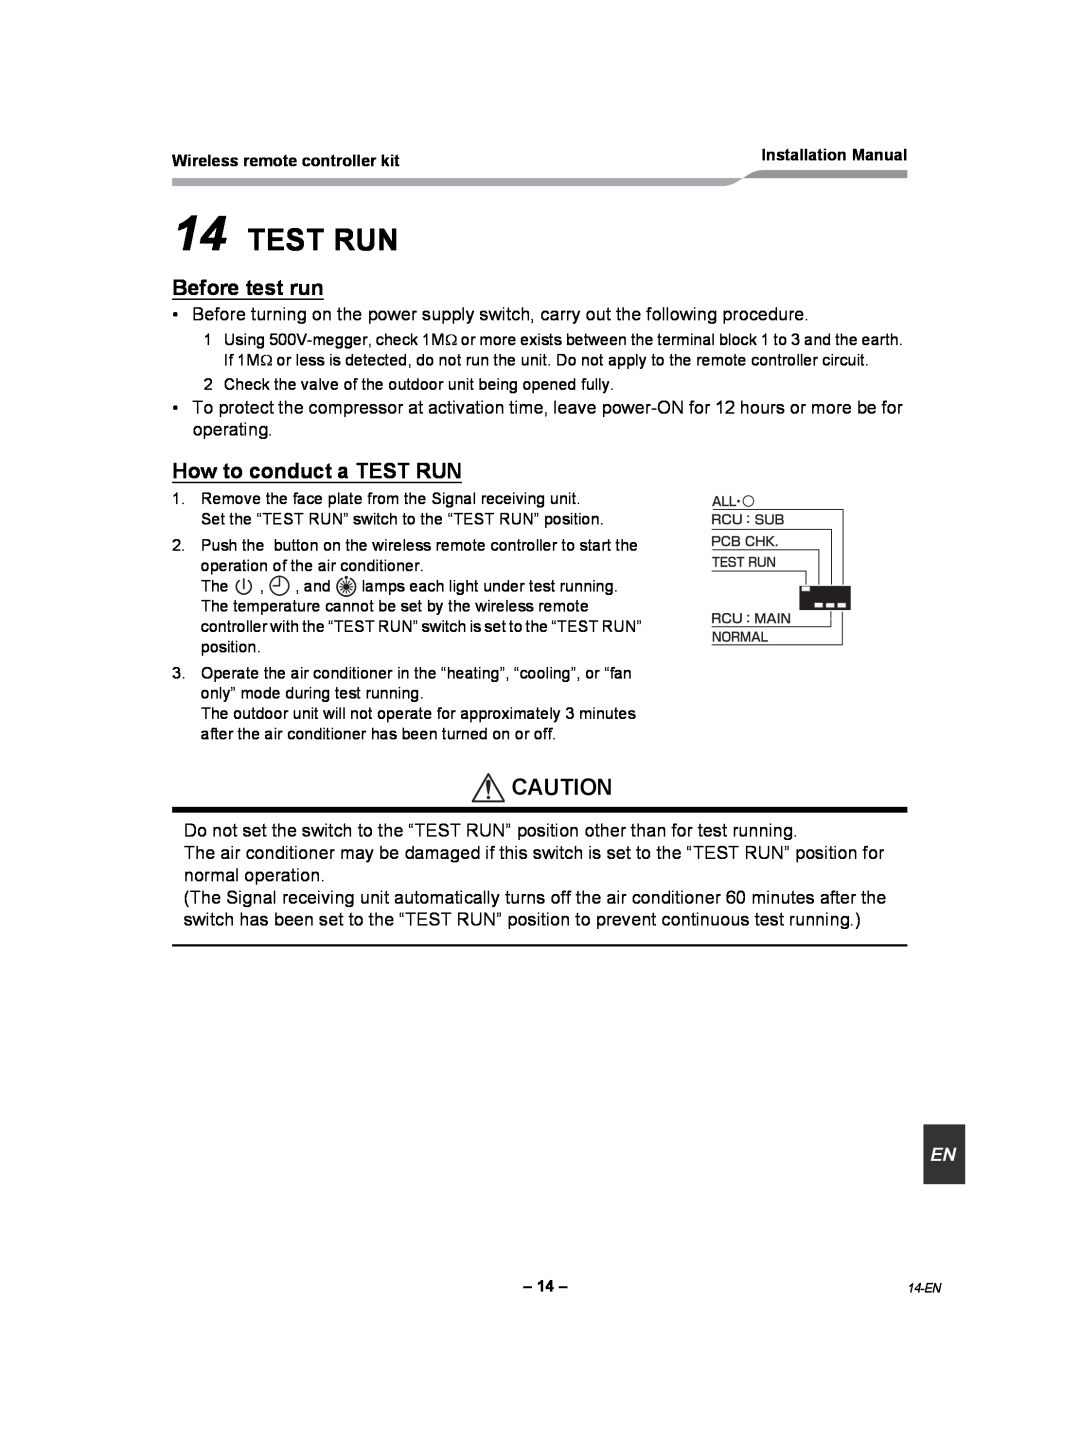 Toshiba TCB-AX21UL installation manual Test Run, Before test run, How to conduct a TEST RUN 